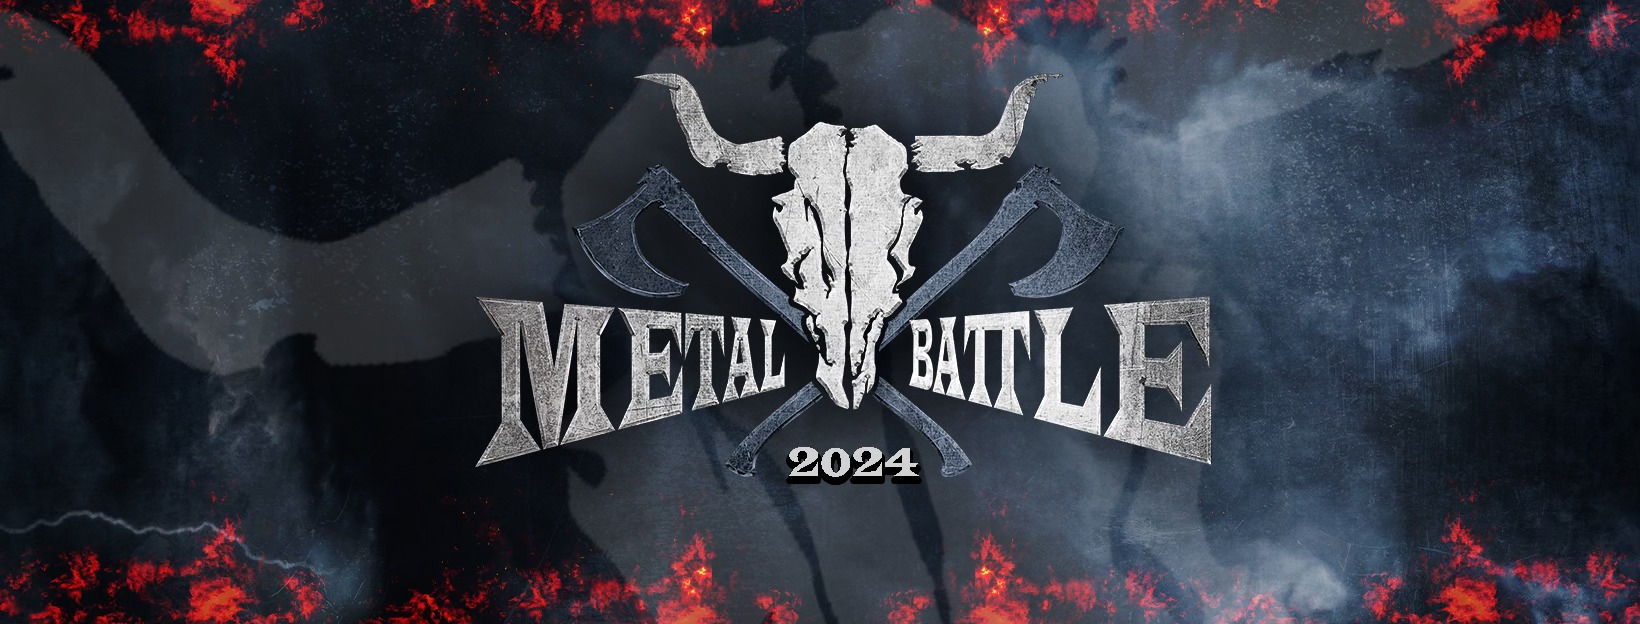 Wacken Metal Battle 2024 am 22. June 2024 @ Viper Room.